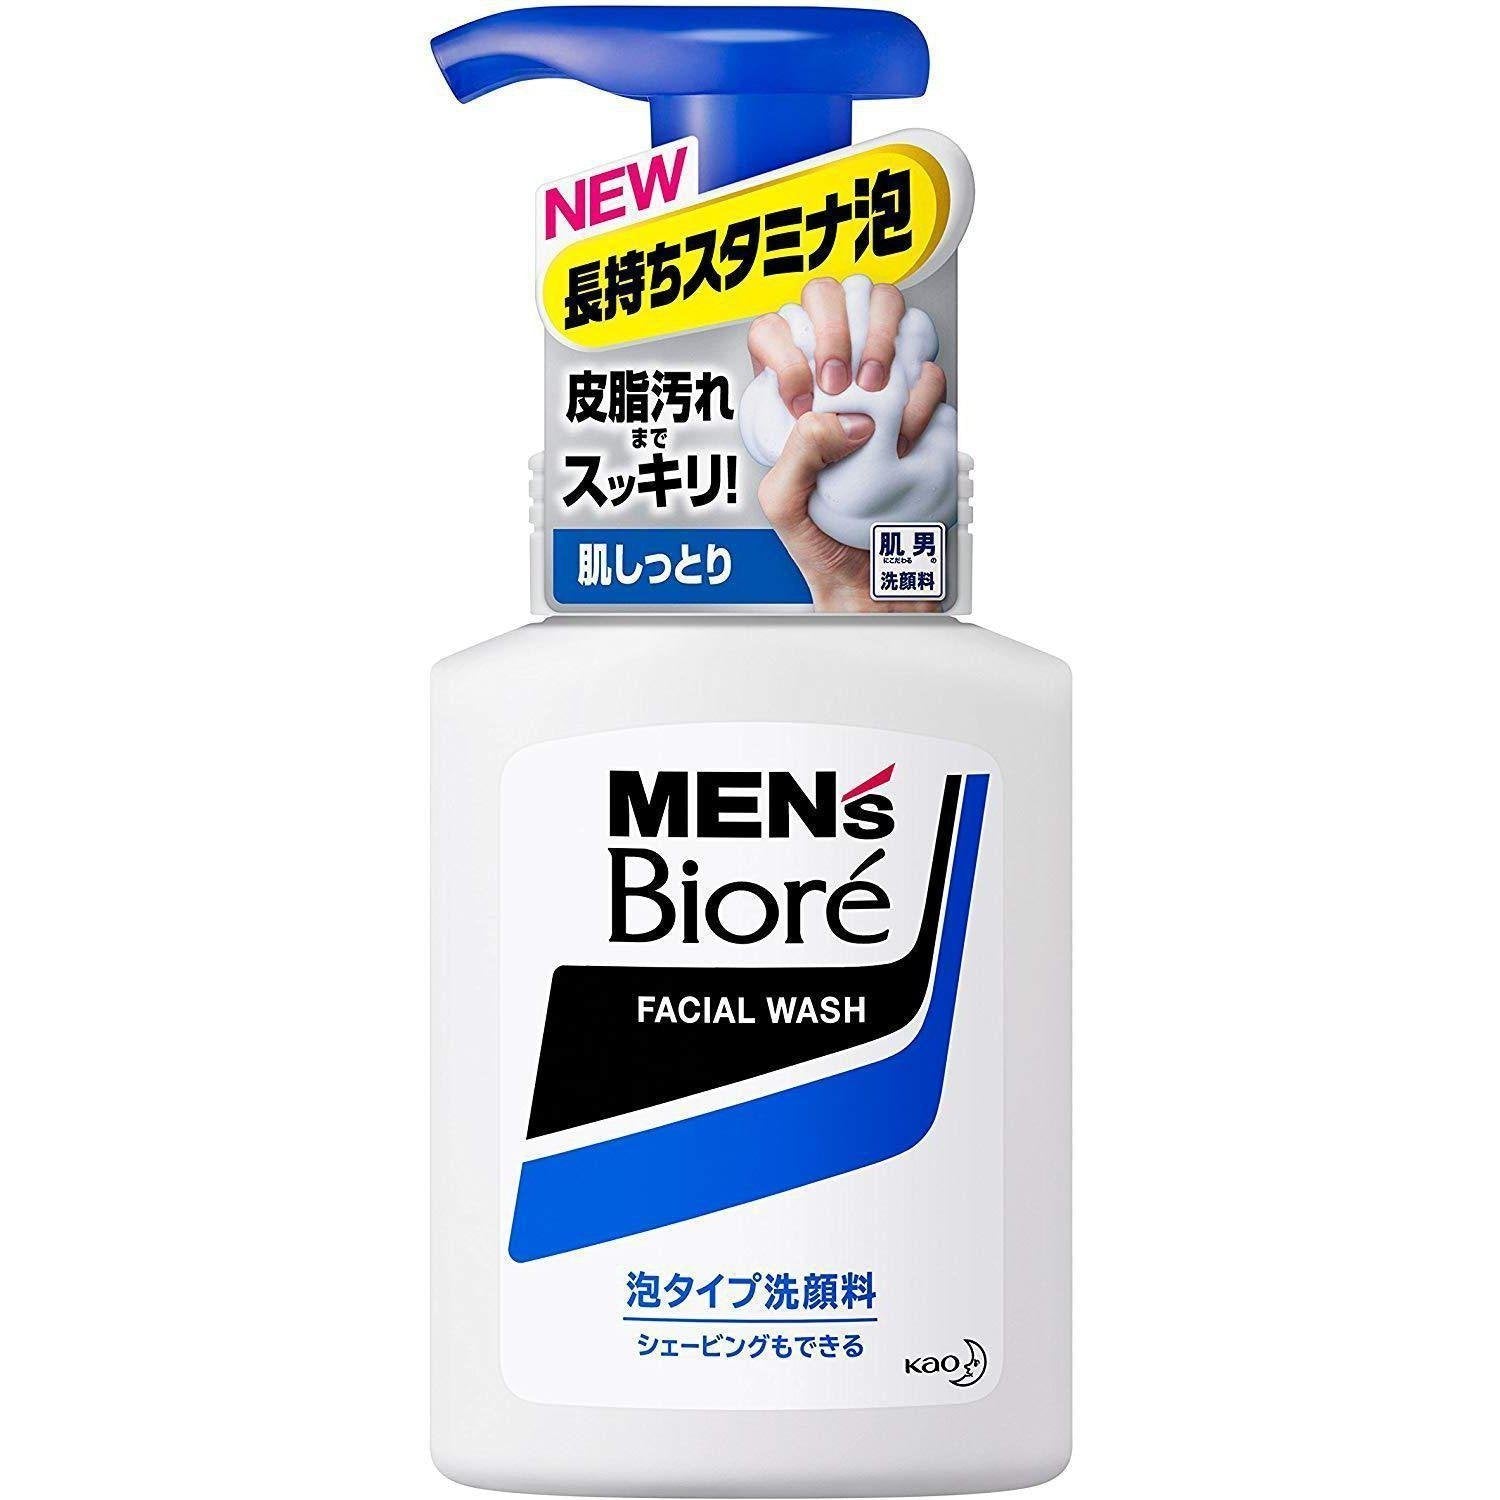 P-1-BIOR-MENFWF-150-Kao Men's Bioré Face Wash Foam 150ml.jpg